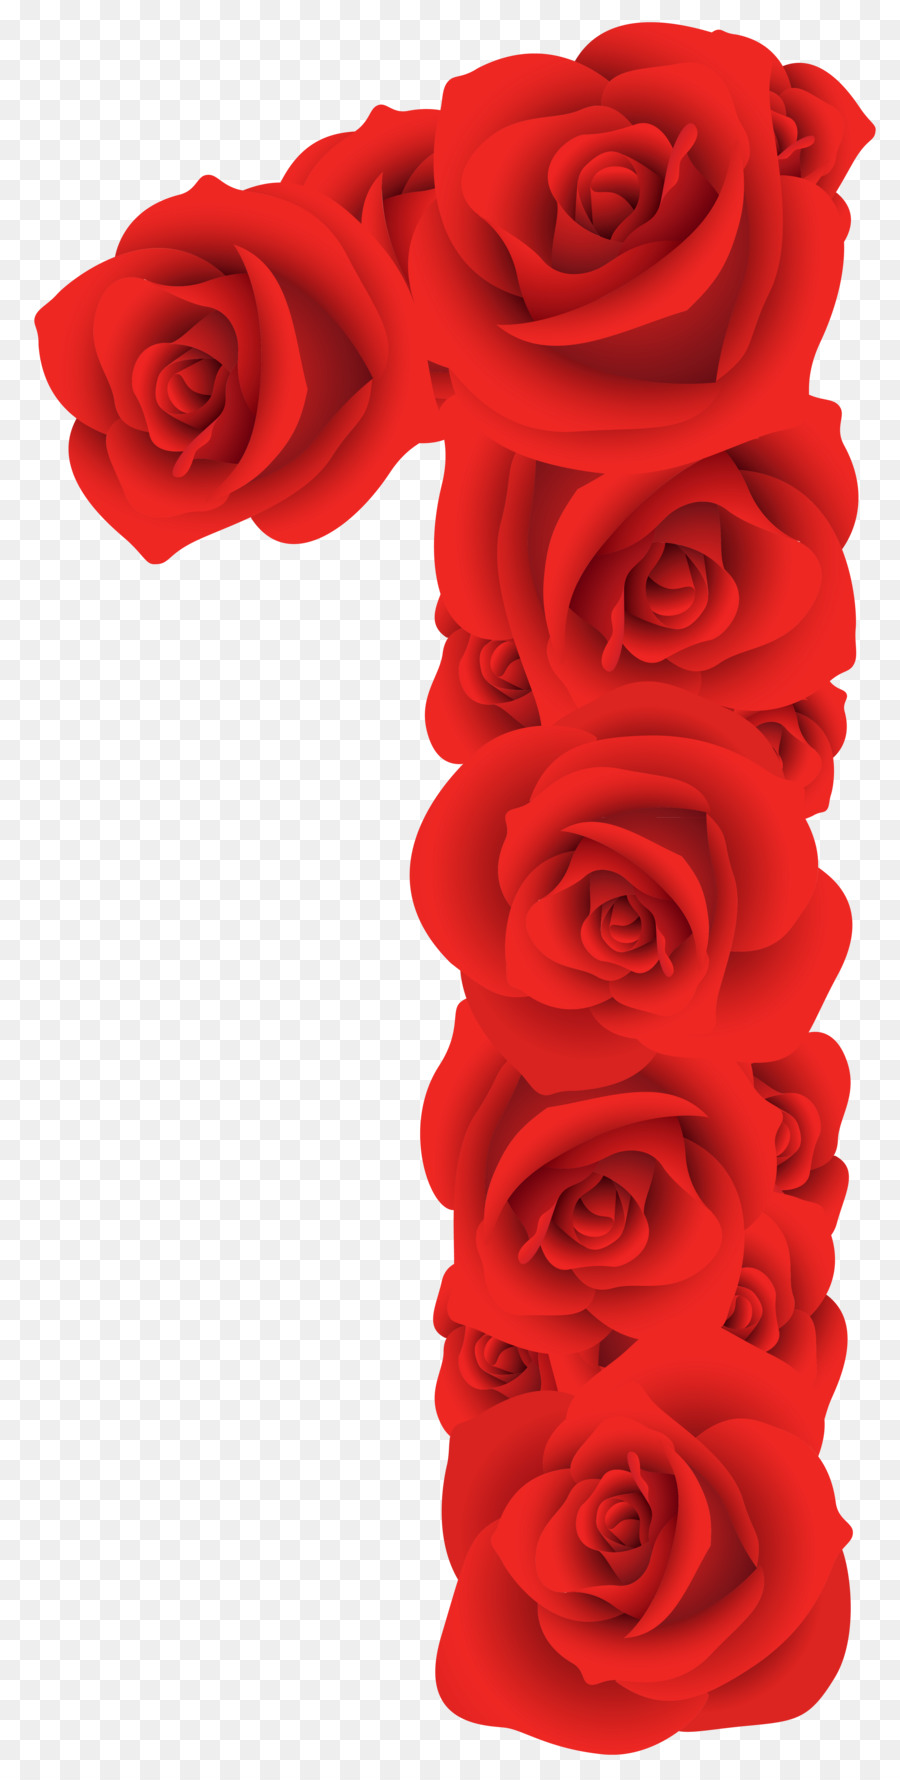 Rosso Clip art - rosa rossa decorativa